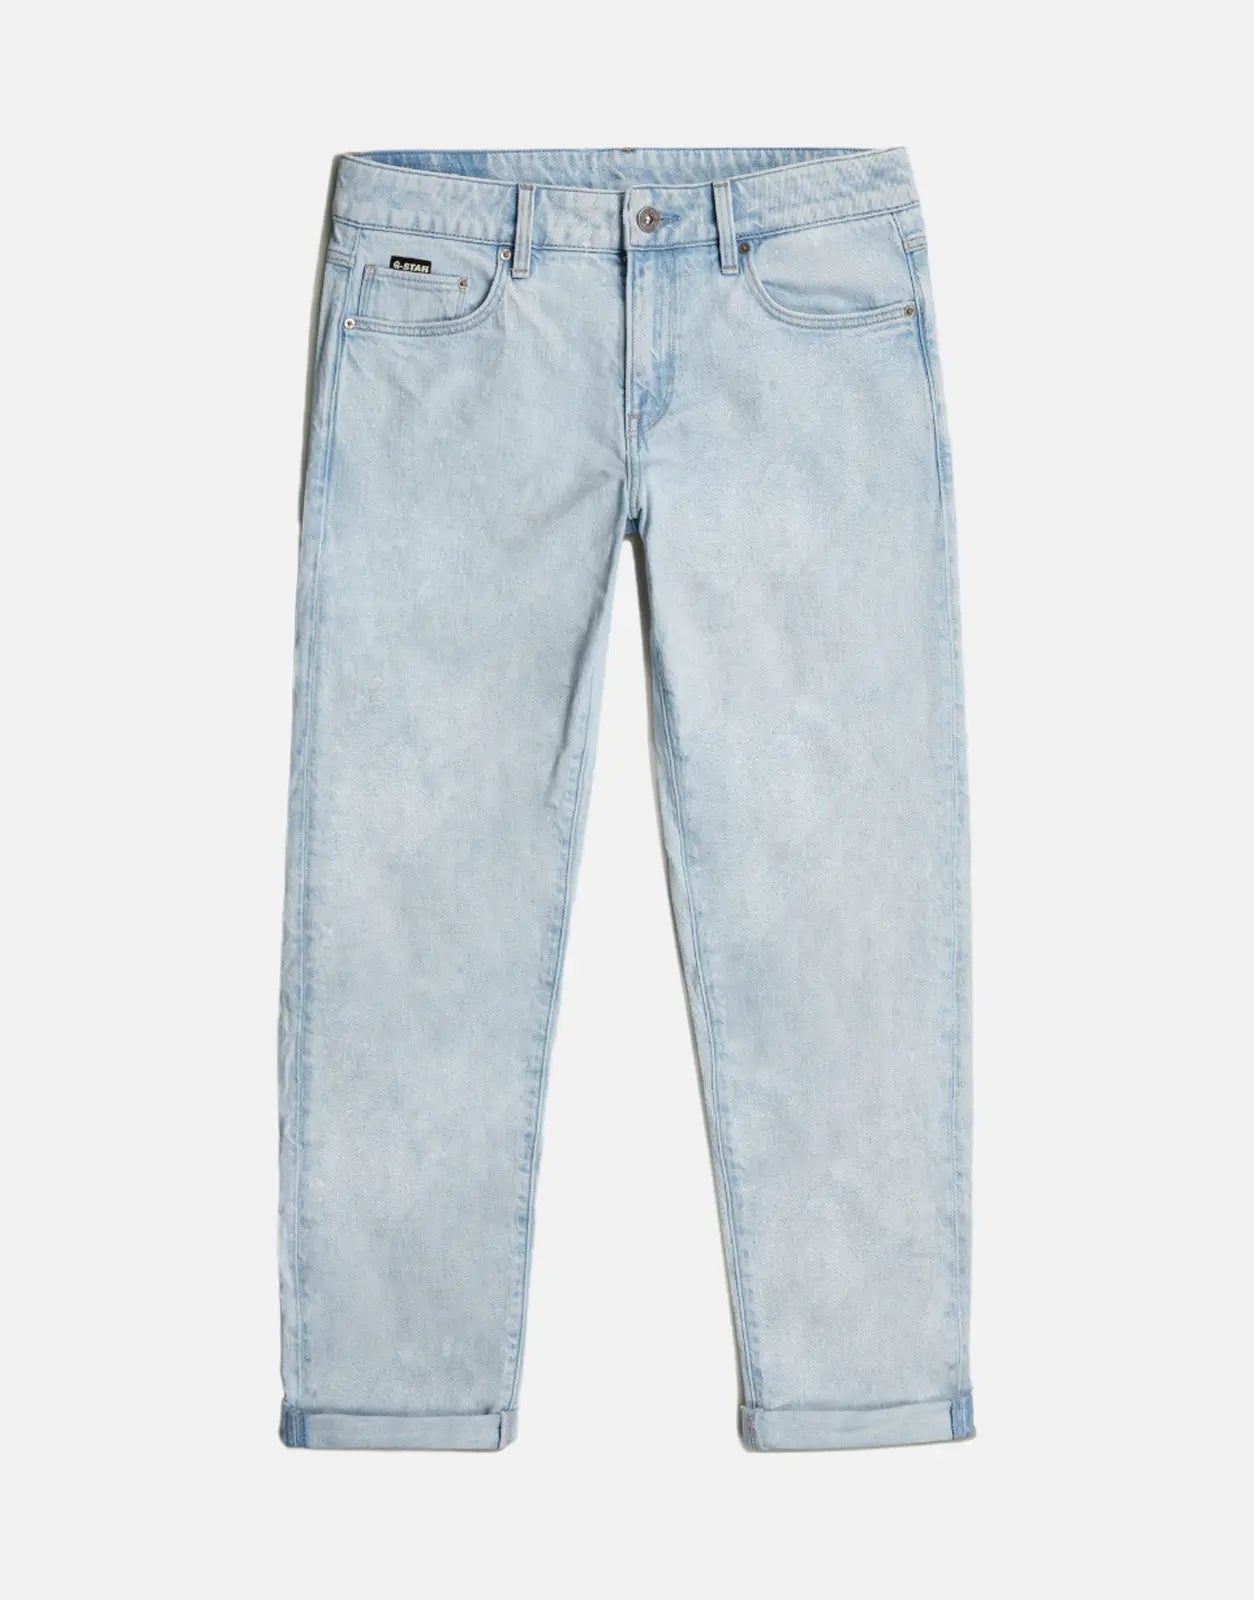 G-Star RAW Kate Boyfriend Light Wash Jeans - Subwear